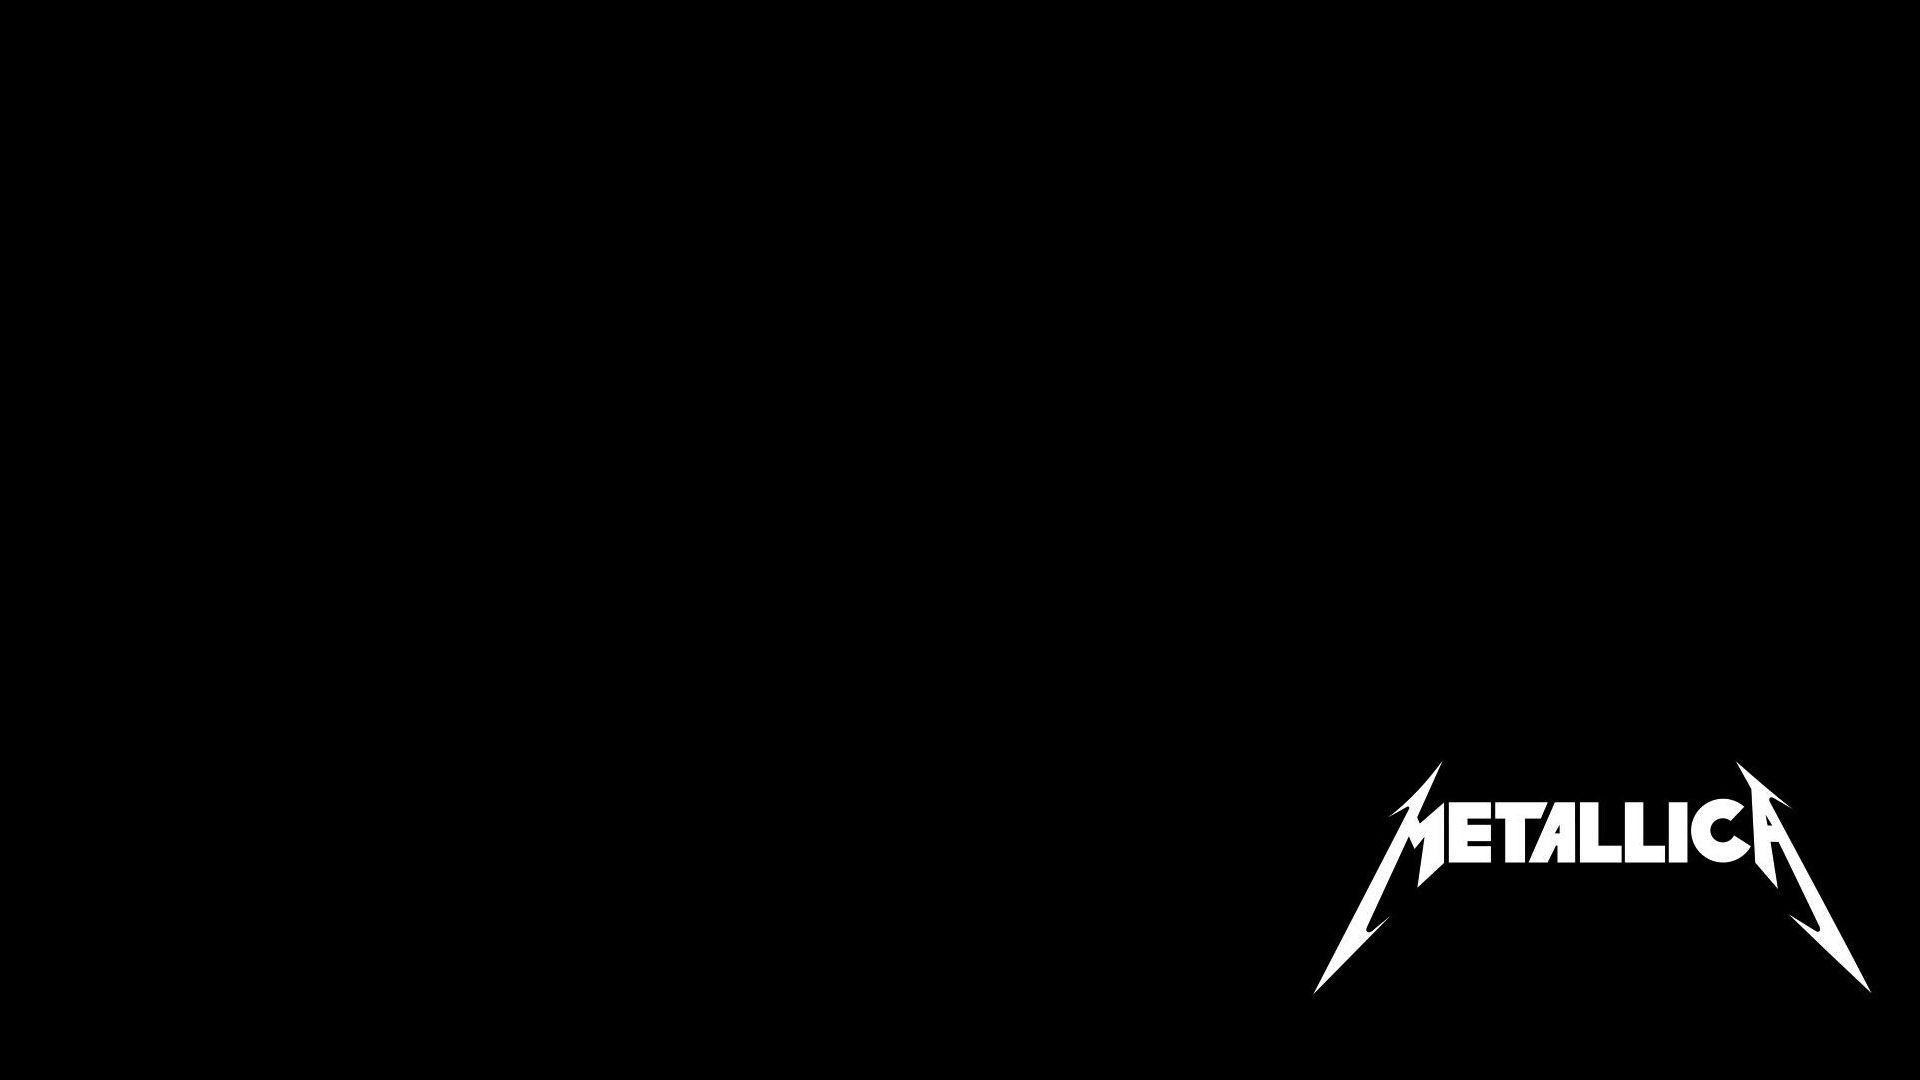 Metallica HD Background – Pitch Black by rohynrajesh on DeviantArt